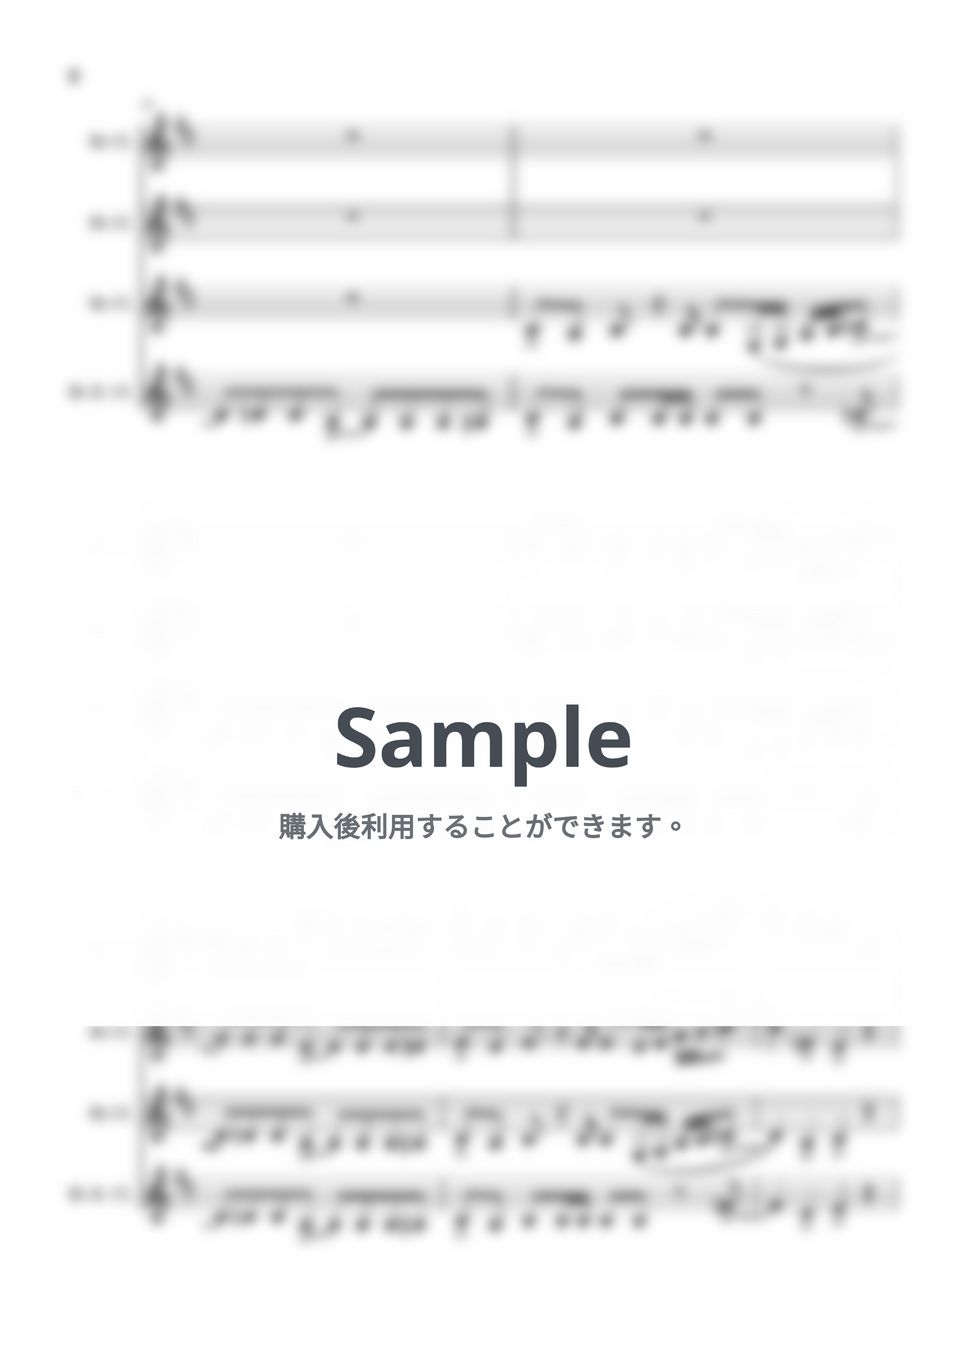 ayase - 祝福【クラリネット四重奏】 (スコア+パート譜) by いたちの楽譜屋さん